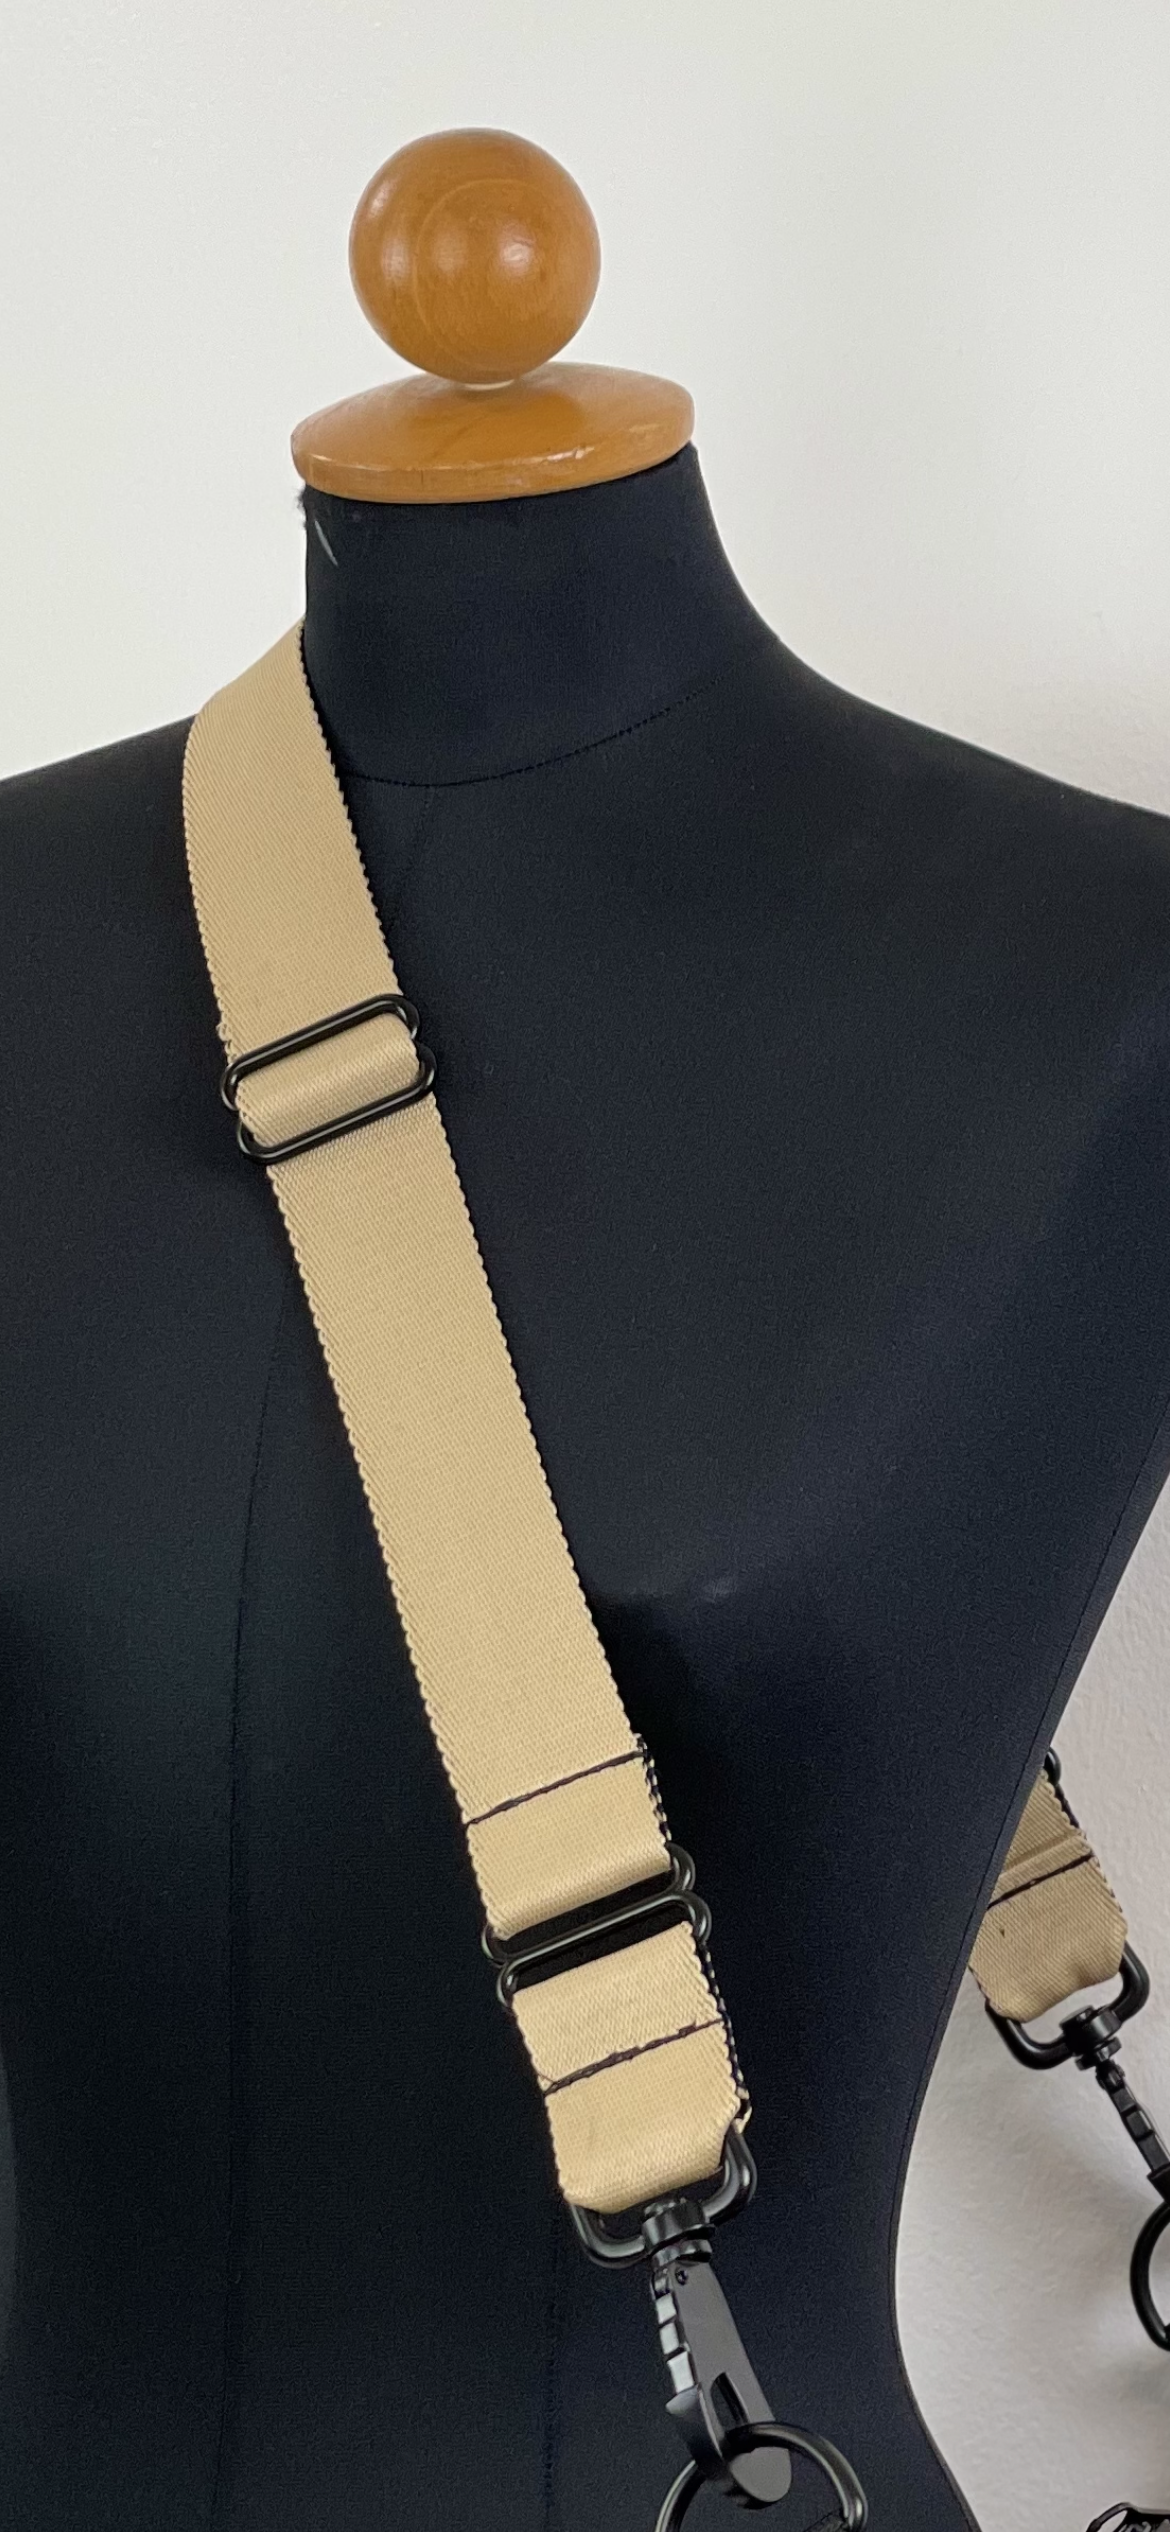 Adjustable Crossbody Bag Straps | Purse Straps Black White Zig Zag 1 Half inch